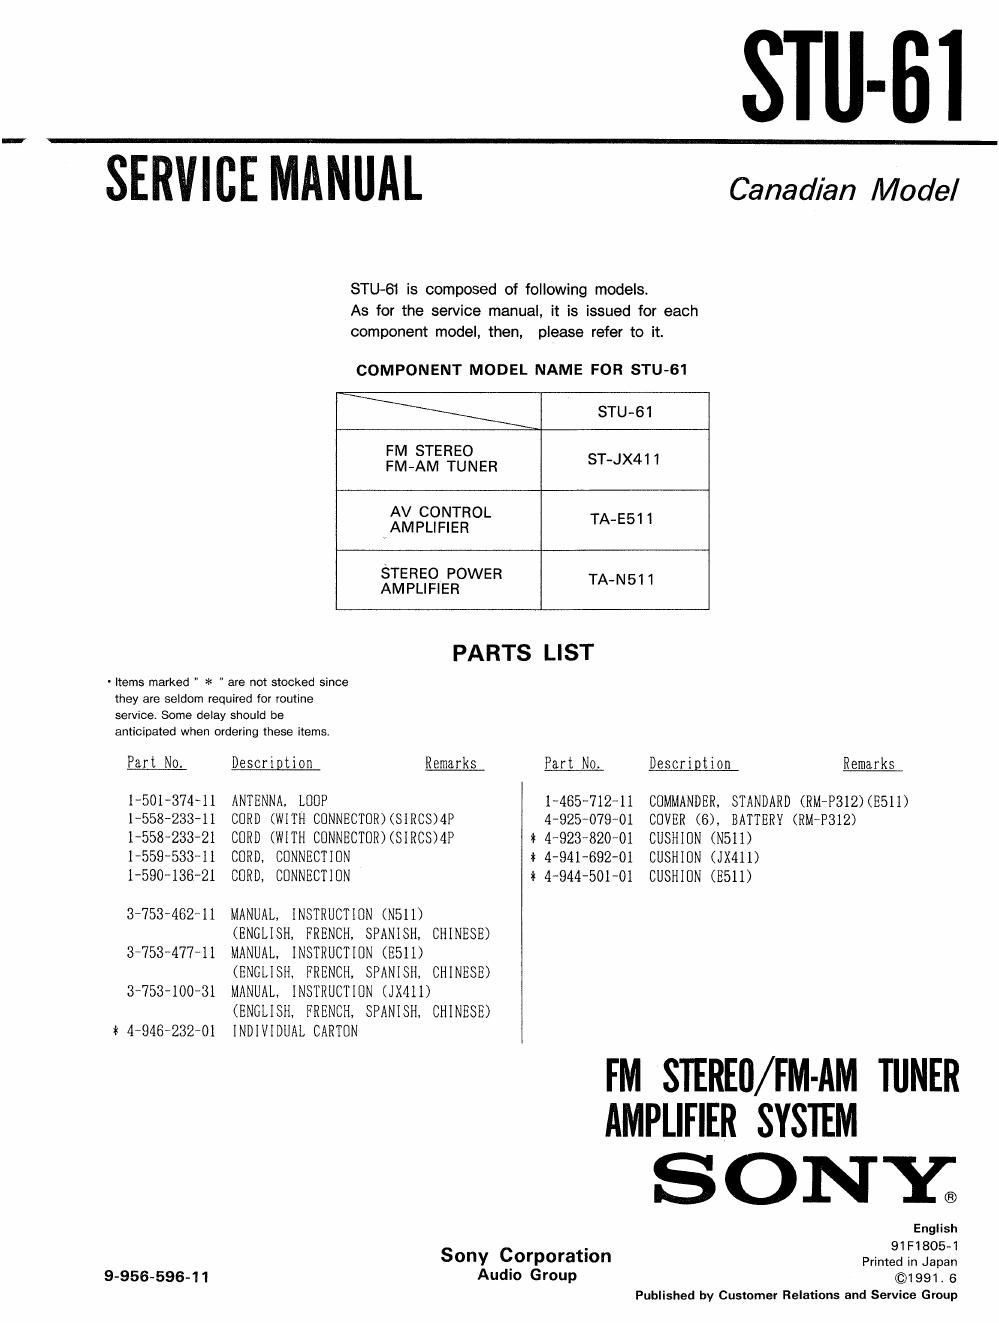 sony stu 61 service manual